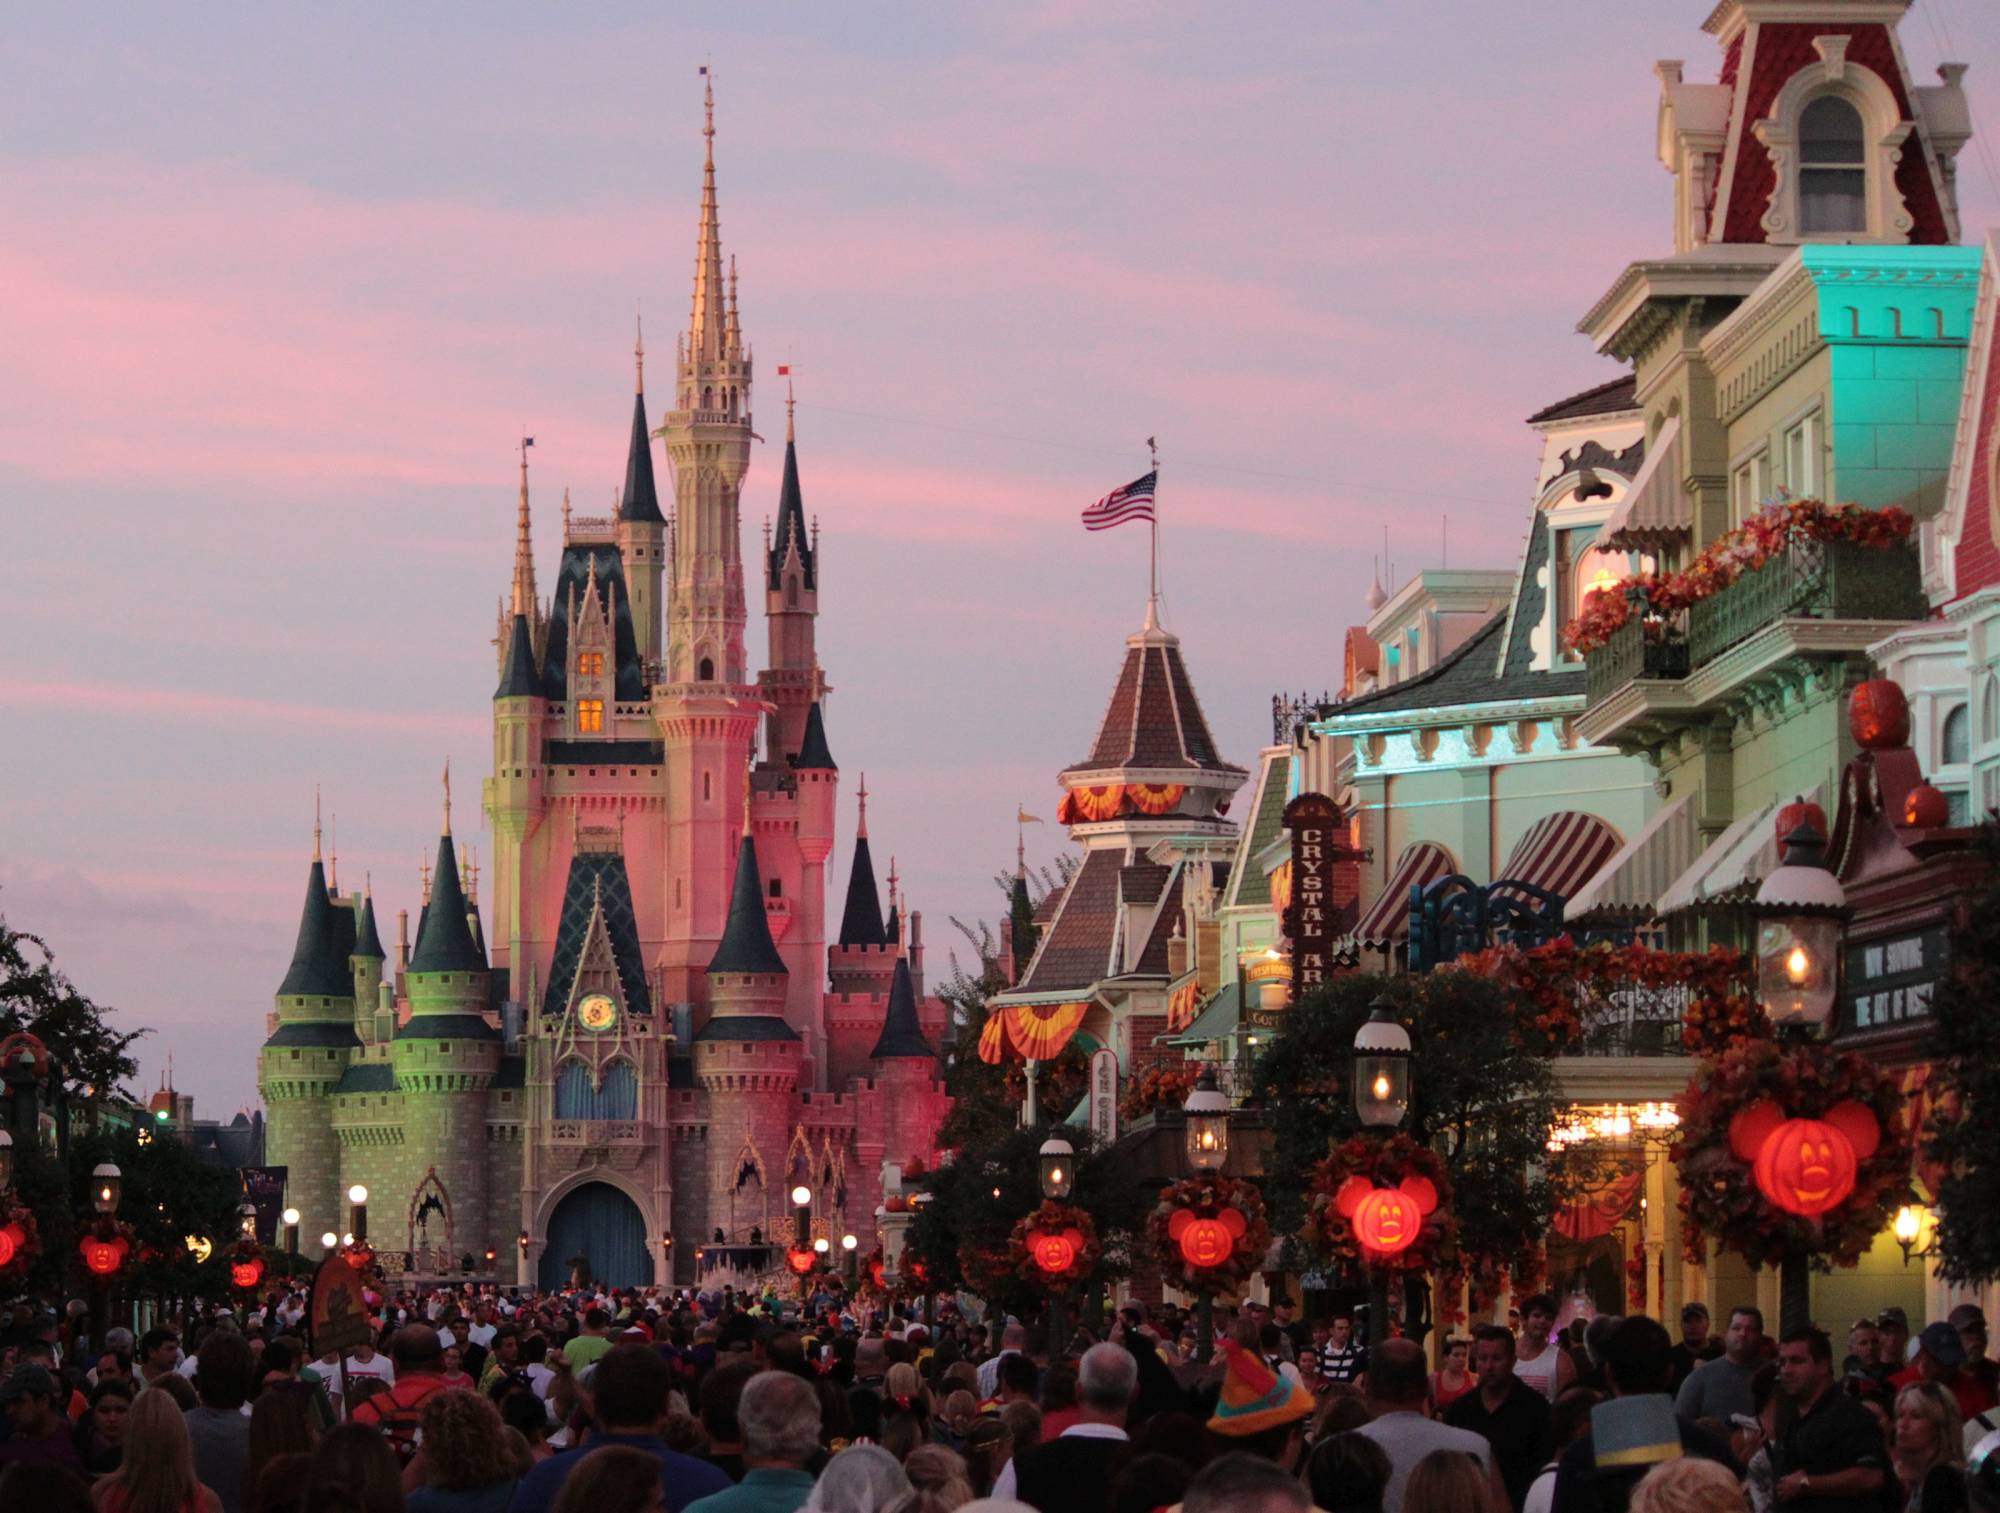 Enjoy Mickey's Very Merry Christmas Party at the Magic Kingdom |PassPorter.com